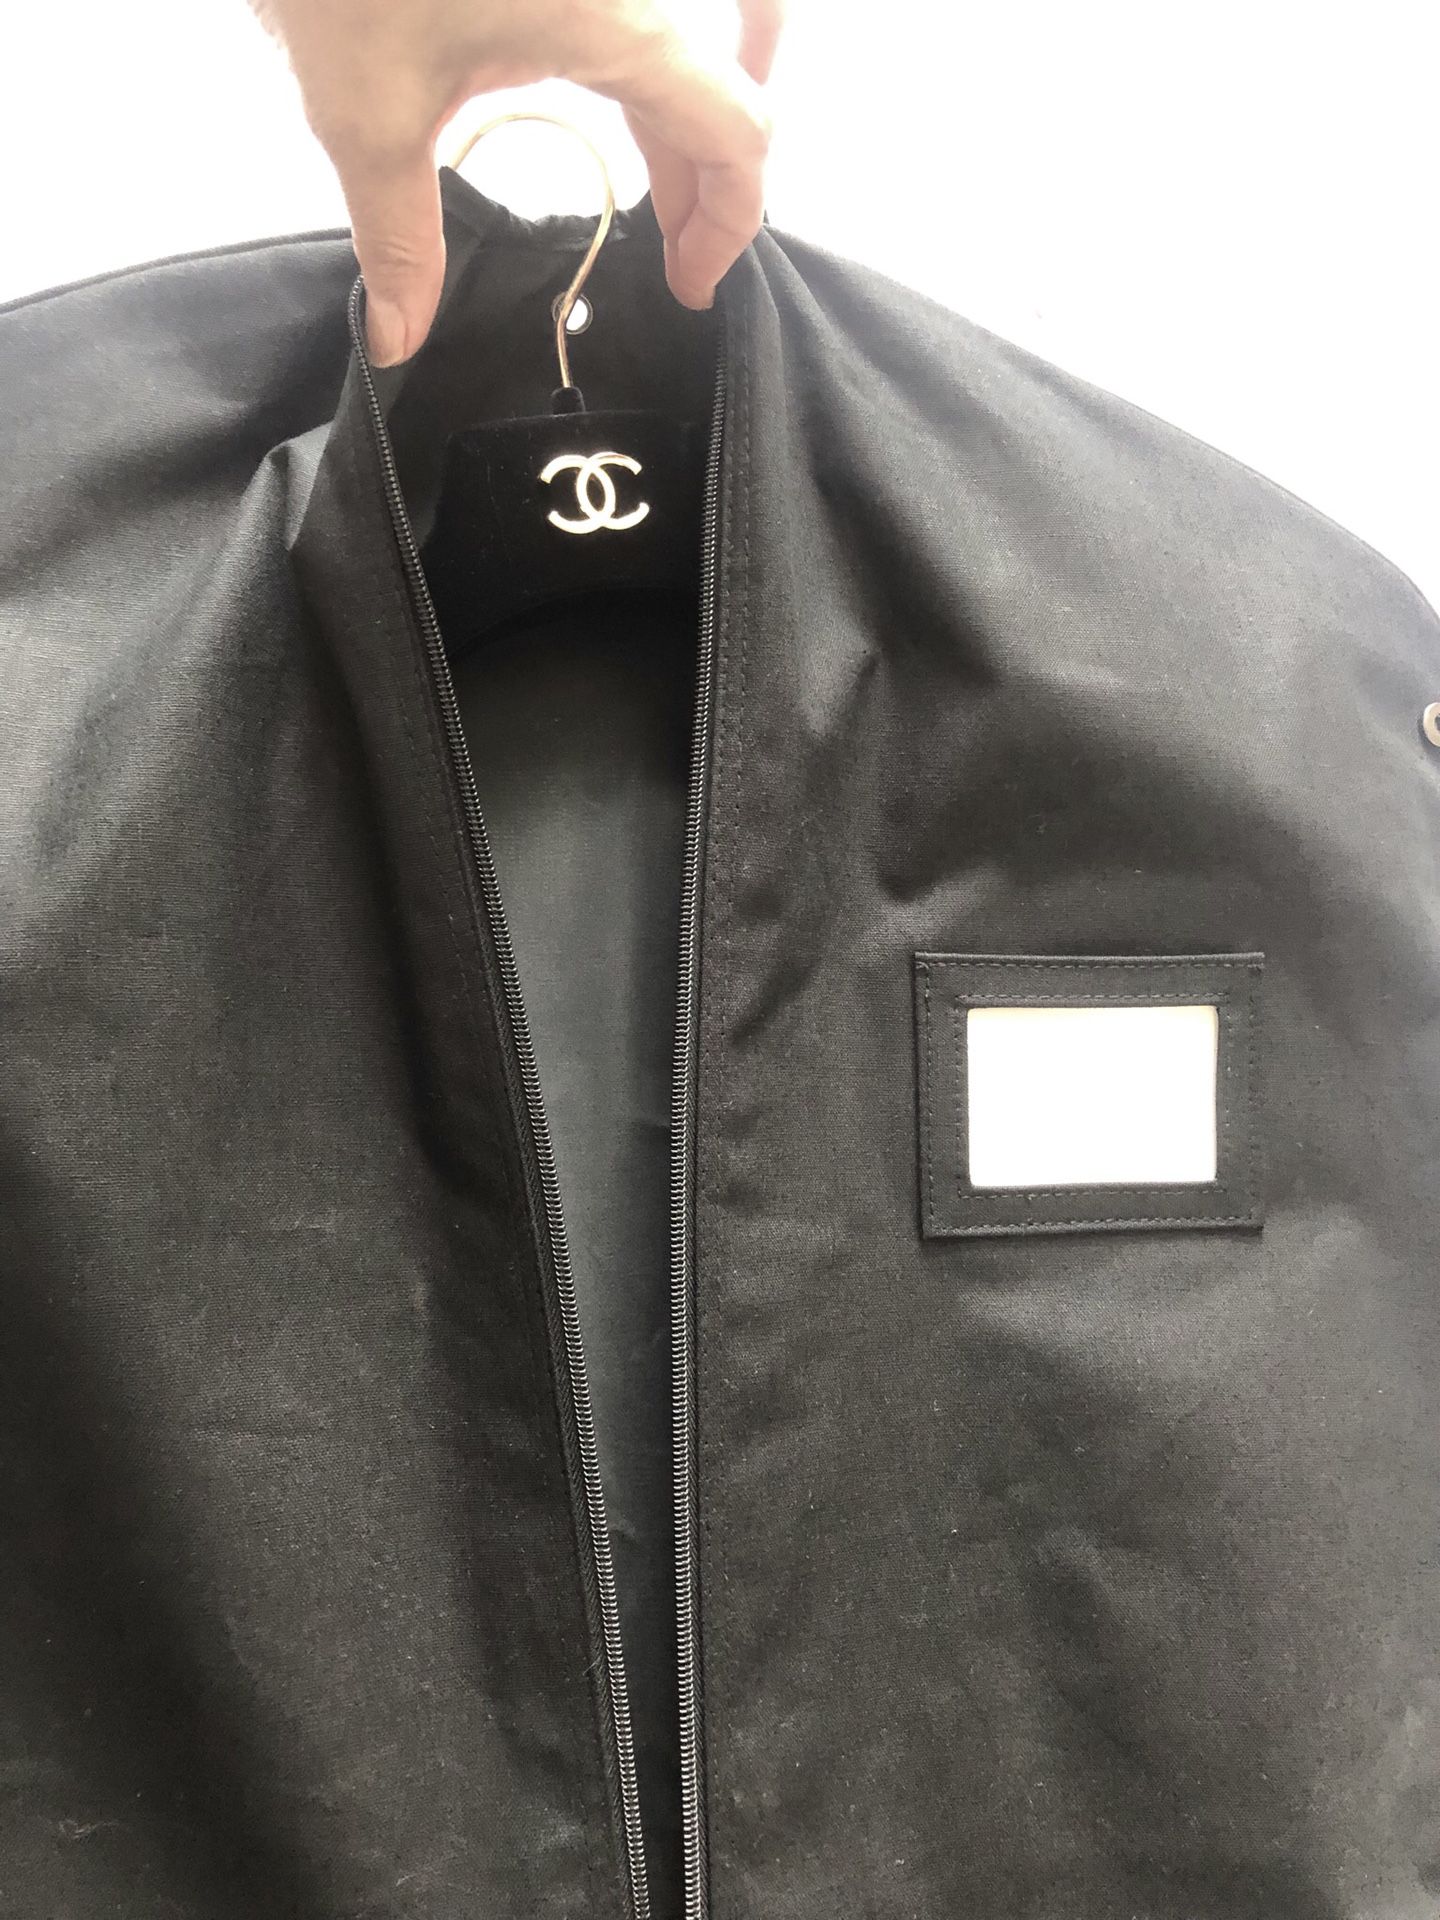 Authentic Chanel garment bag